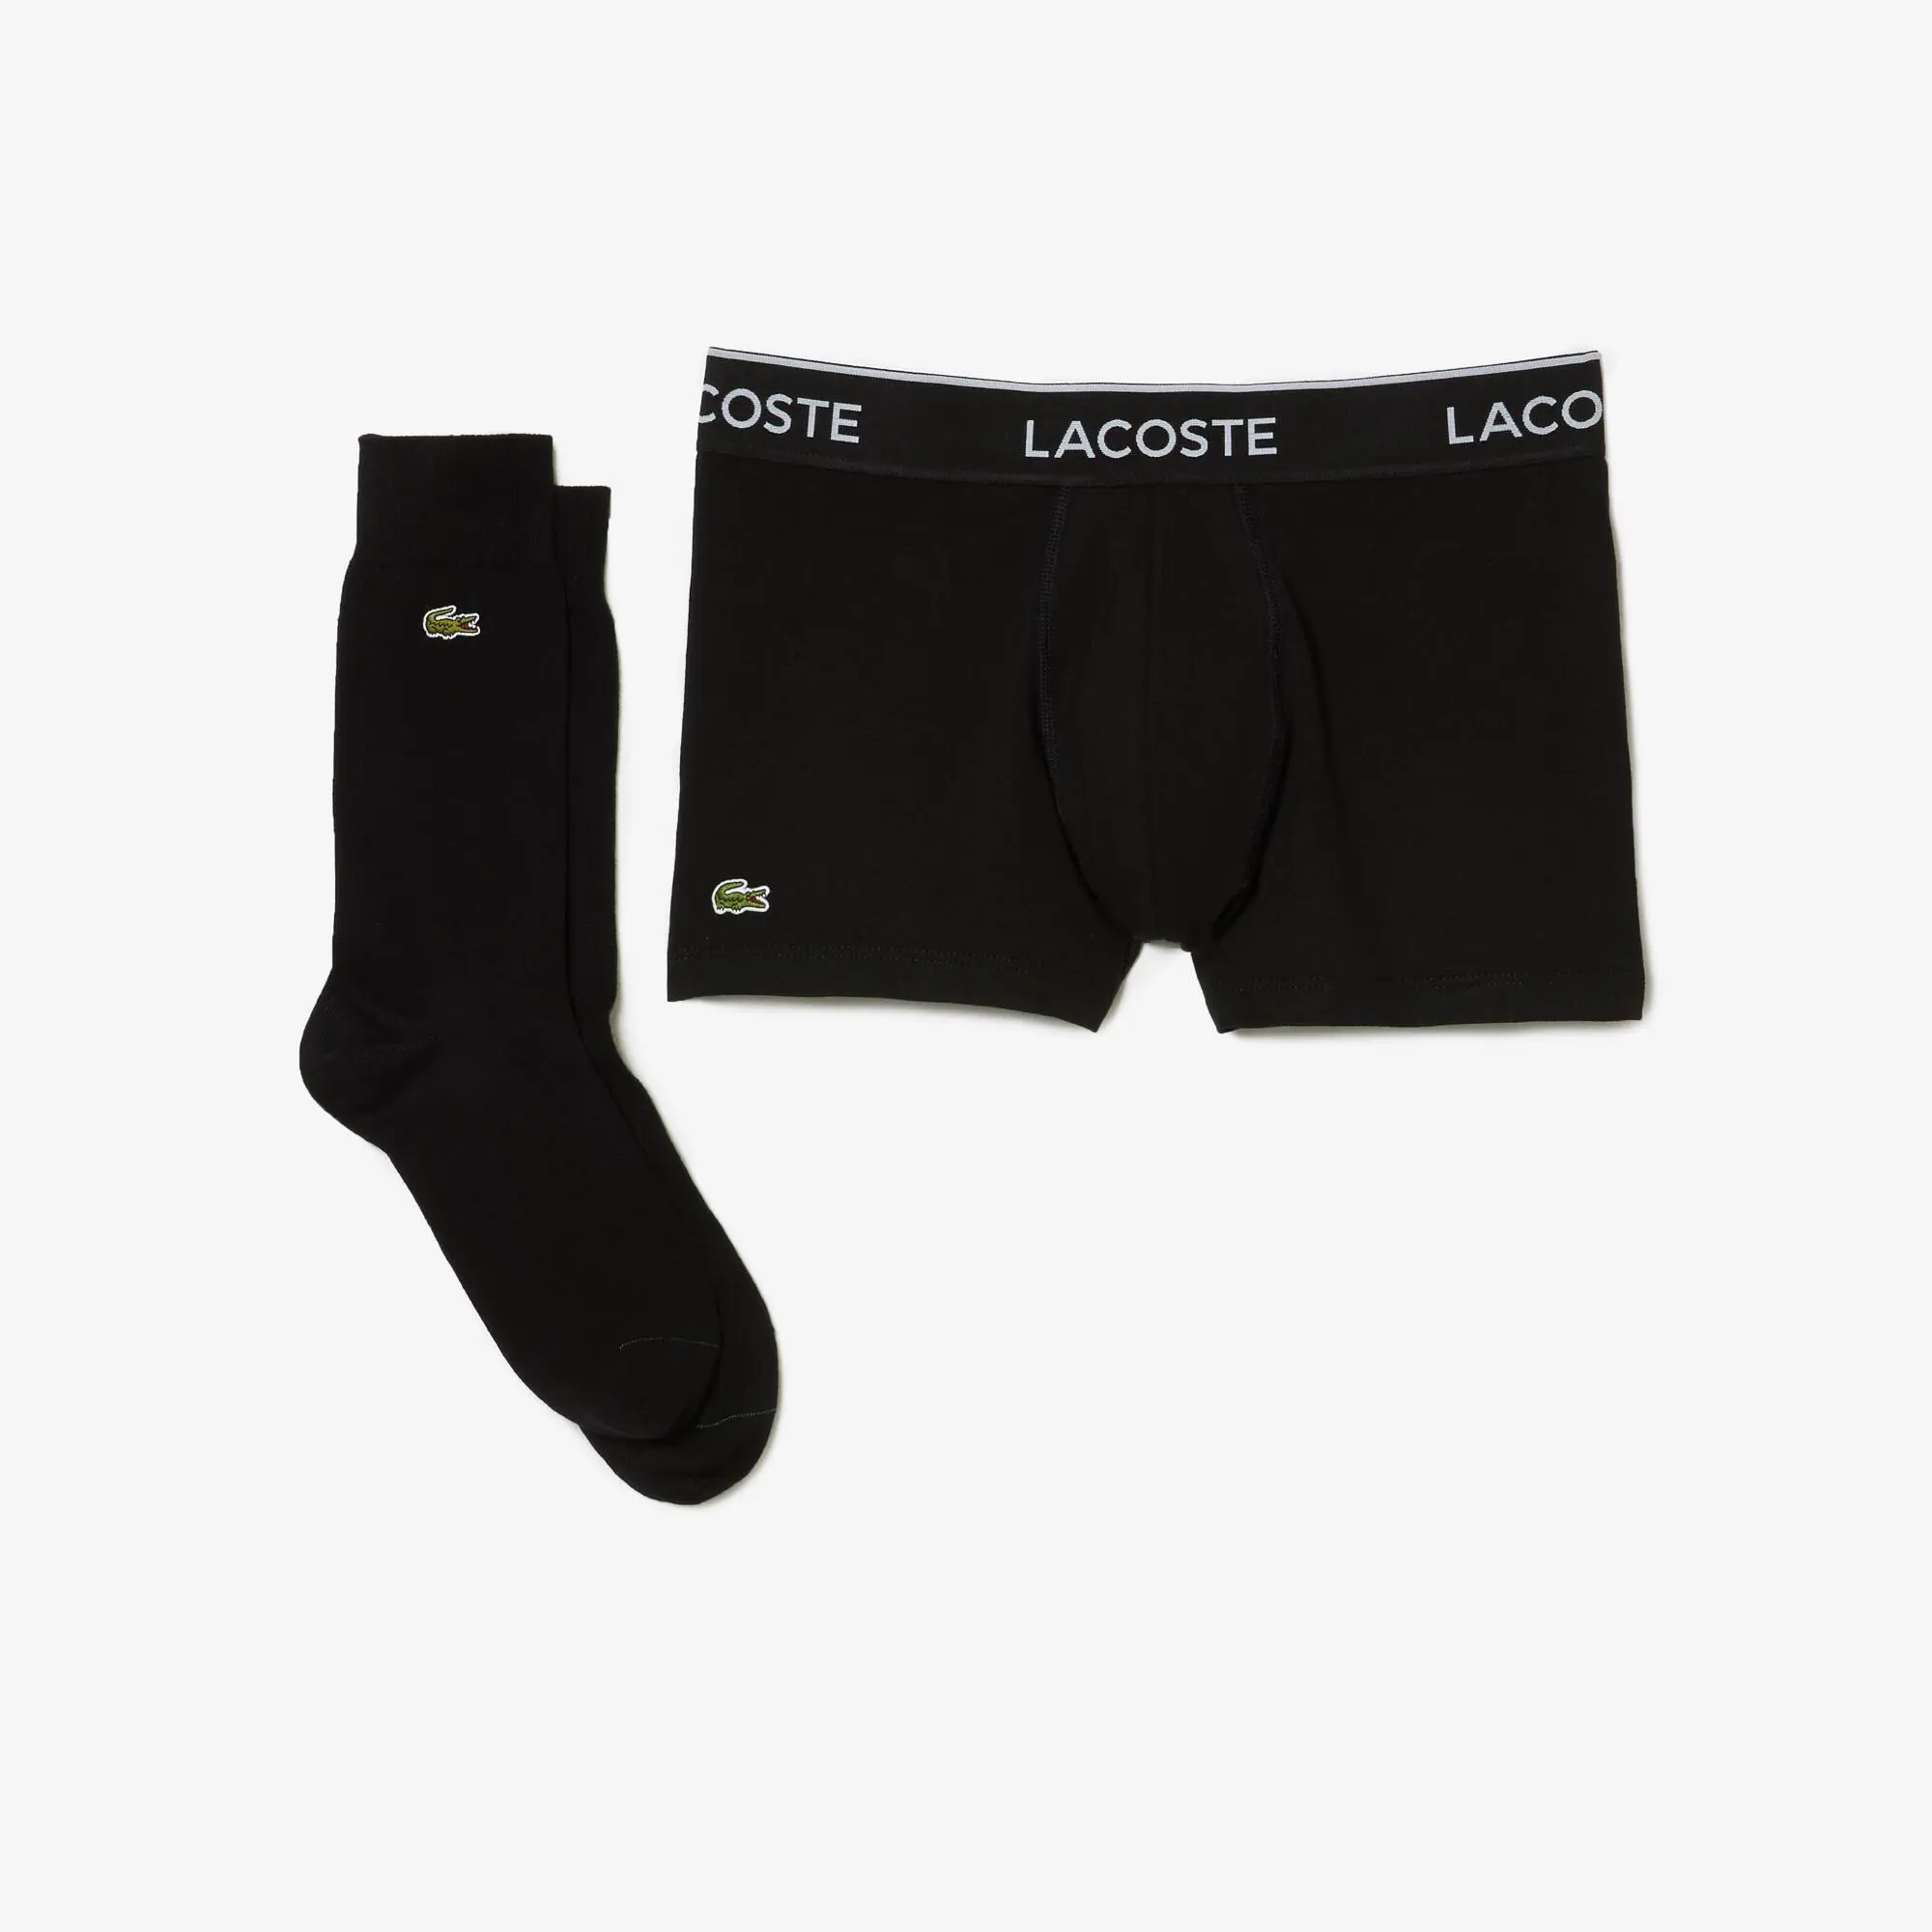 Lacoste Set regalo da uomo con boxere e calze Lacoste Holiday. 2